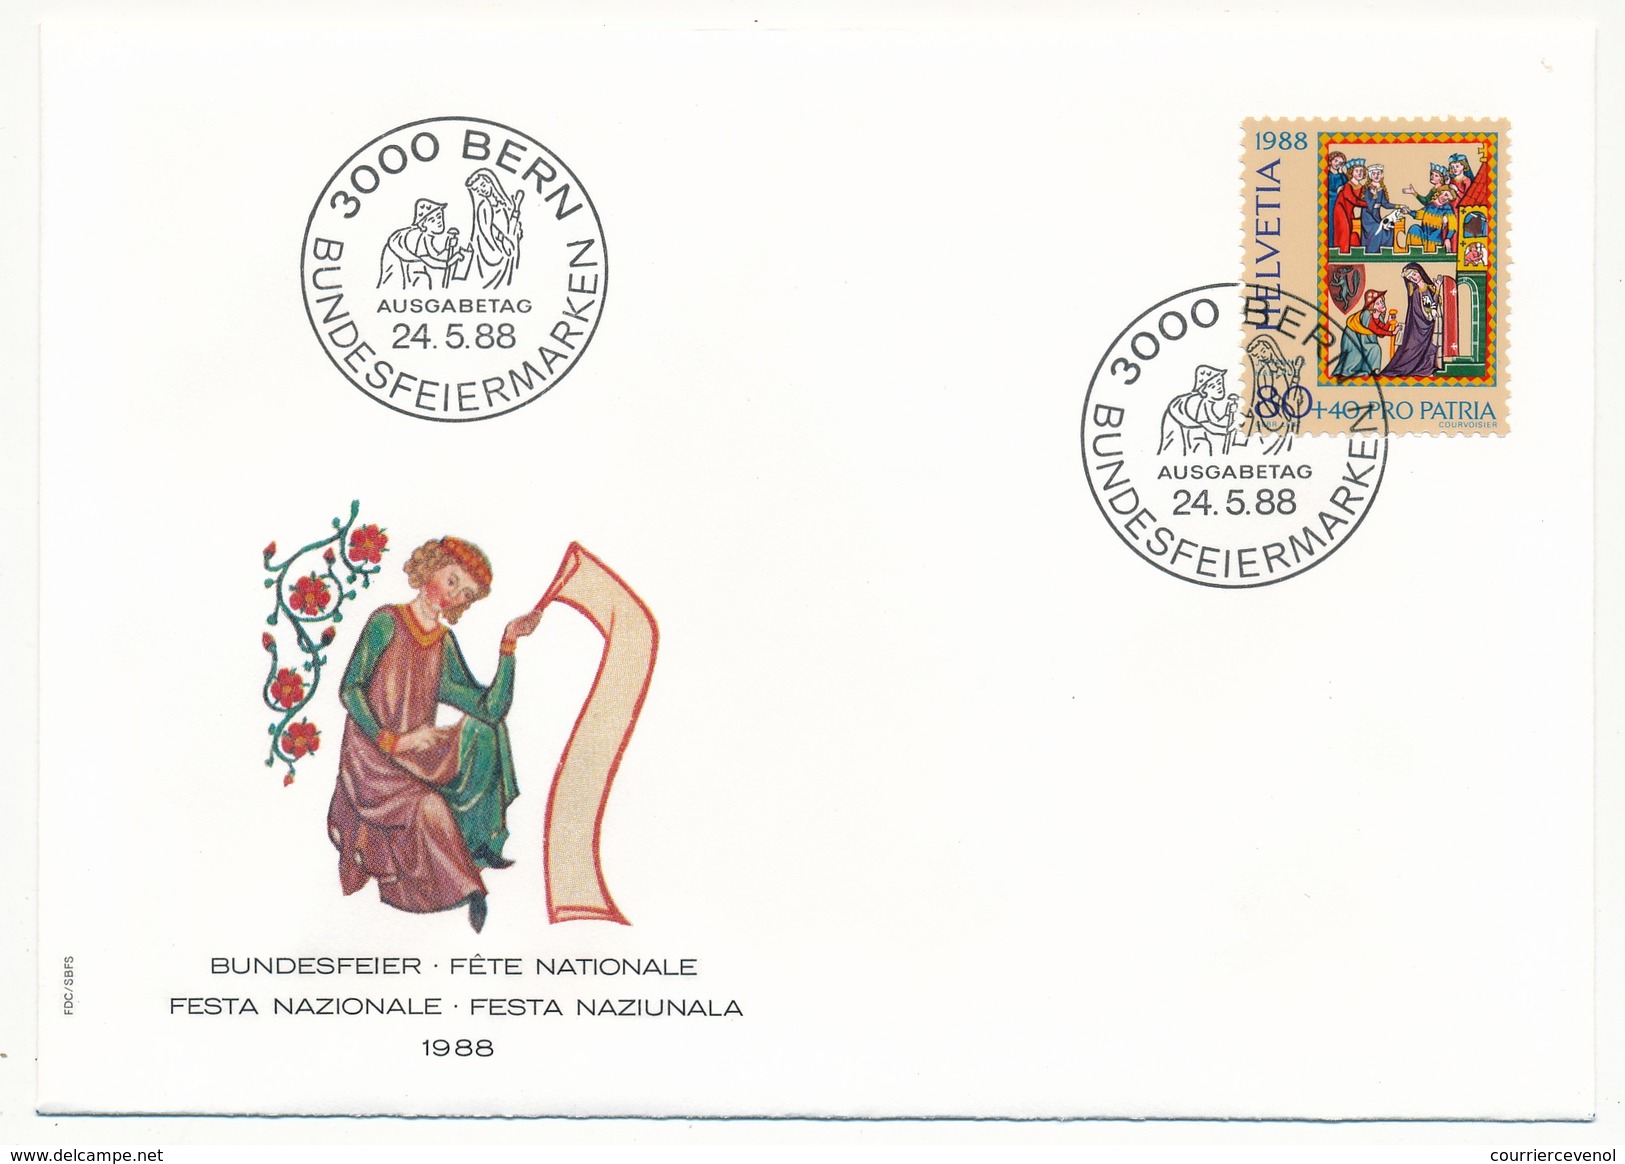 SUISSE - 5 Enveloppes FDC - Fête Nationale 1988 (Pro Patria) - BERN 24/5/1988 - Service